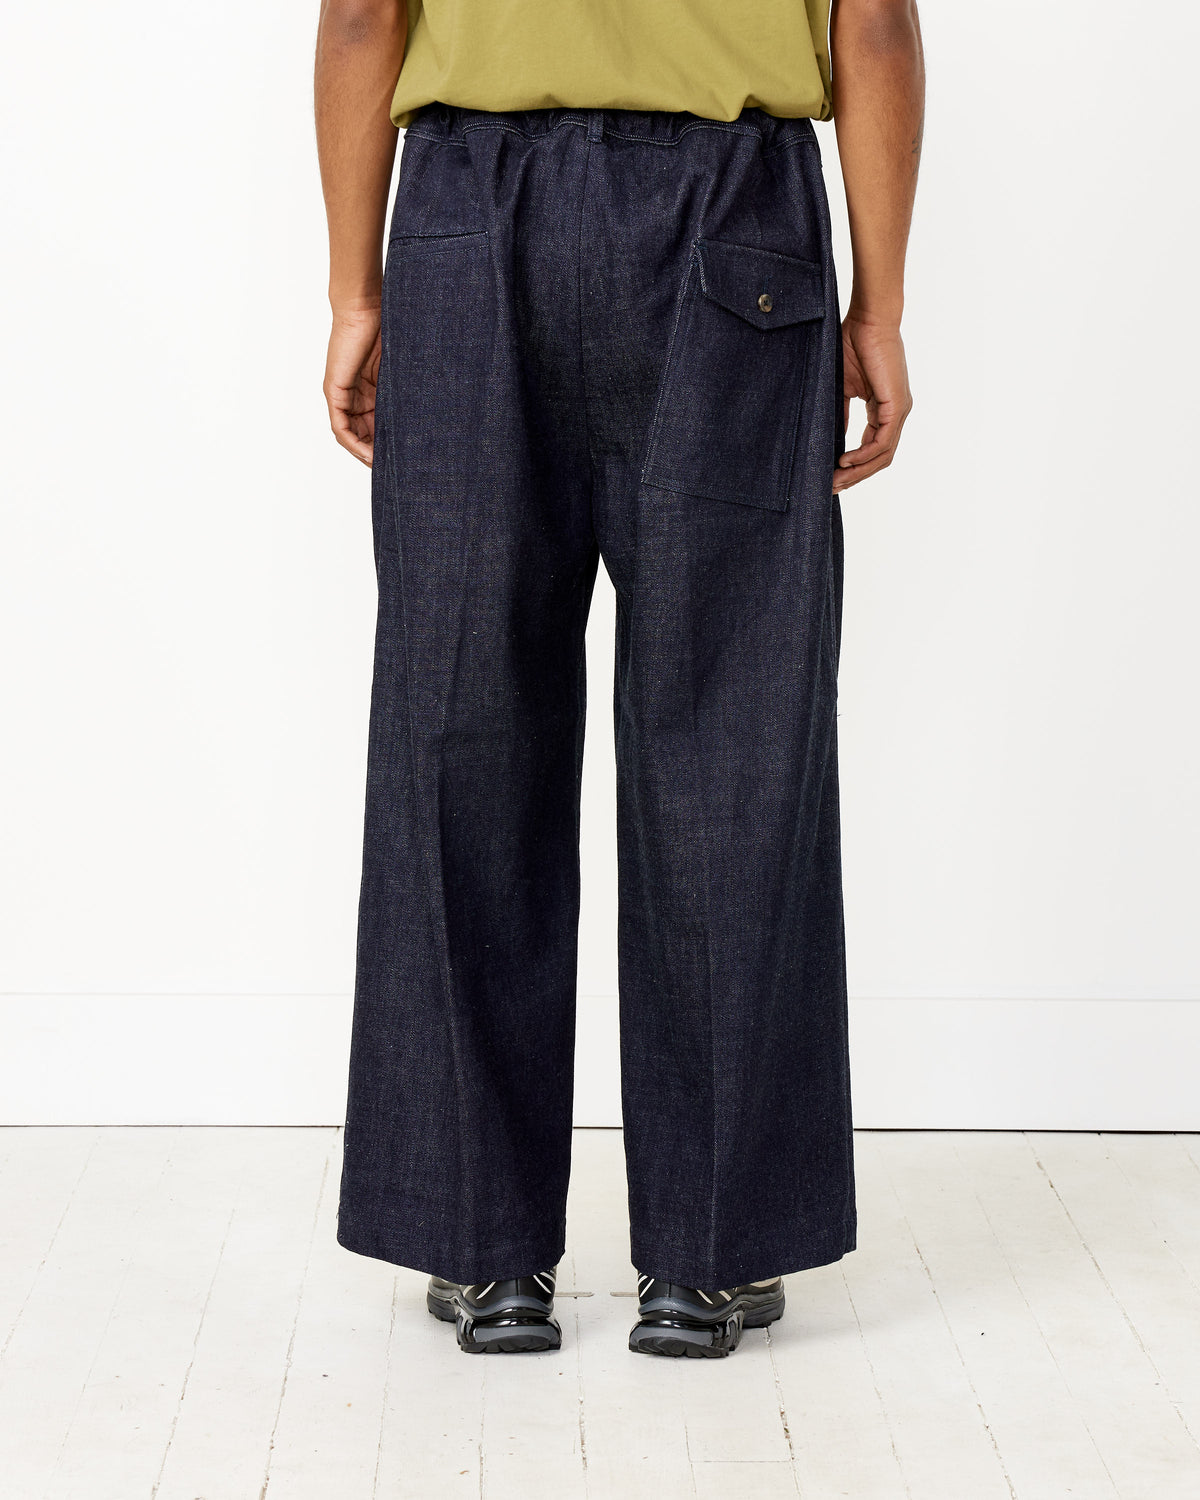 Explore our extensive assortment of Hakama Organic Selvedge Pants